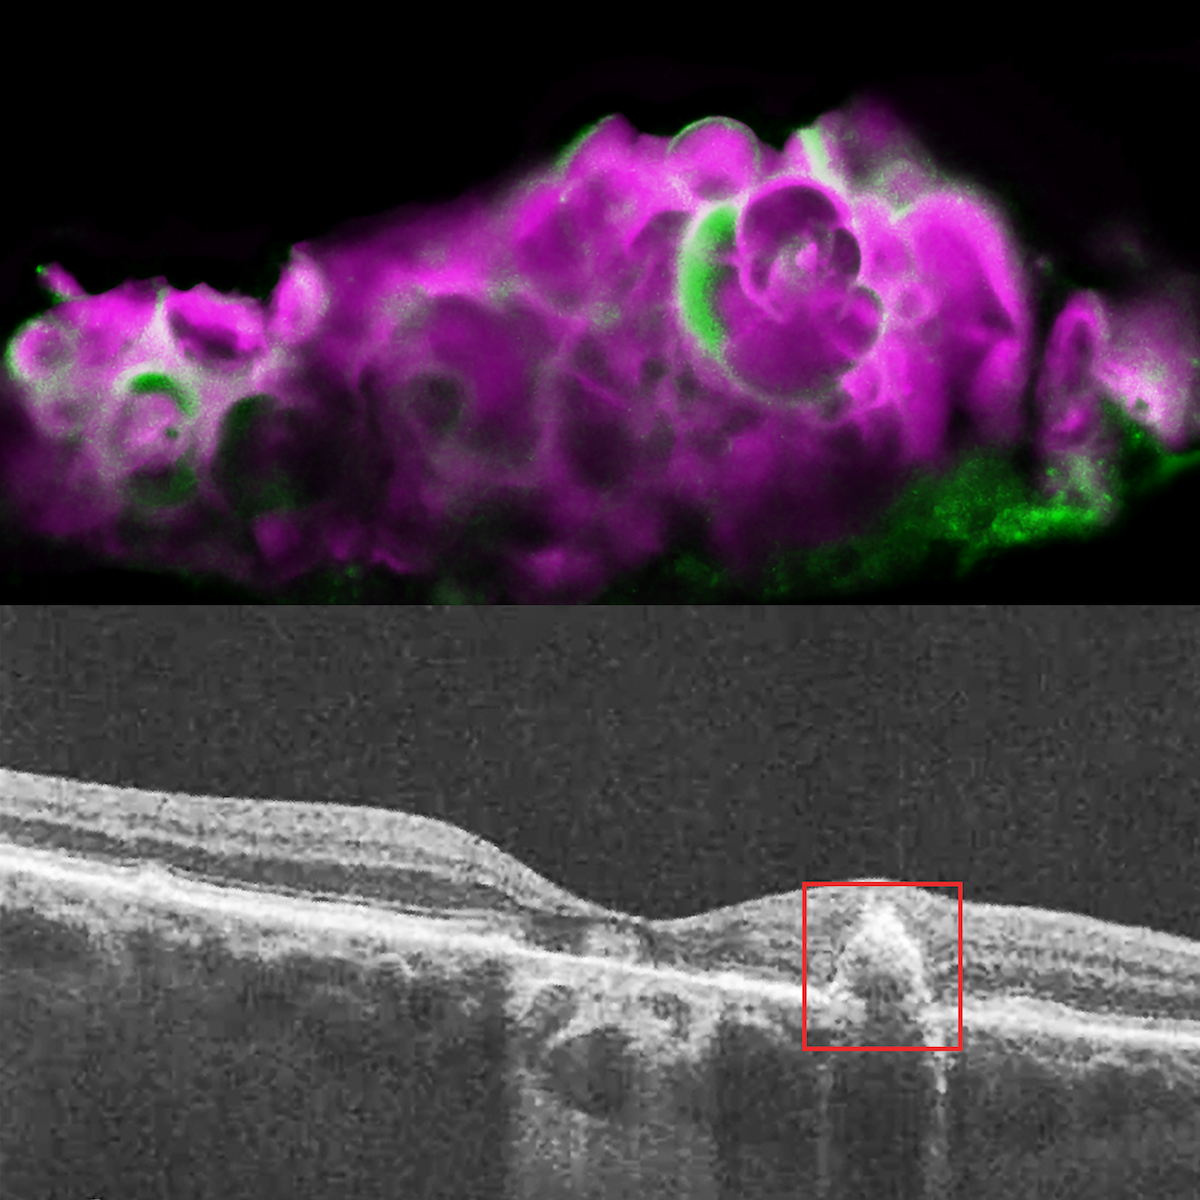 Images of dry AMD retina